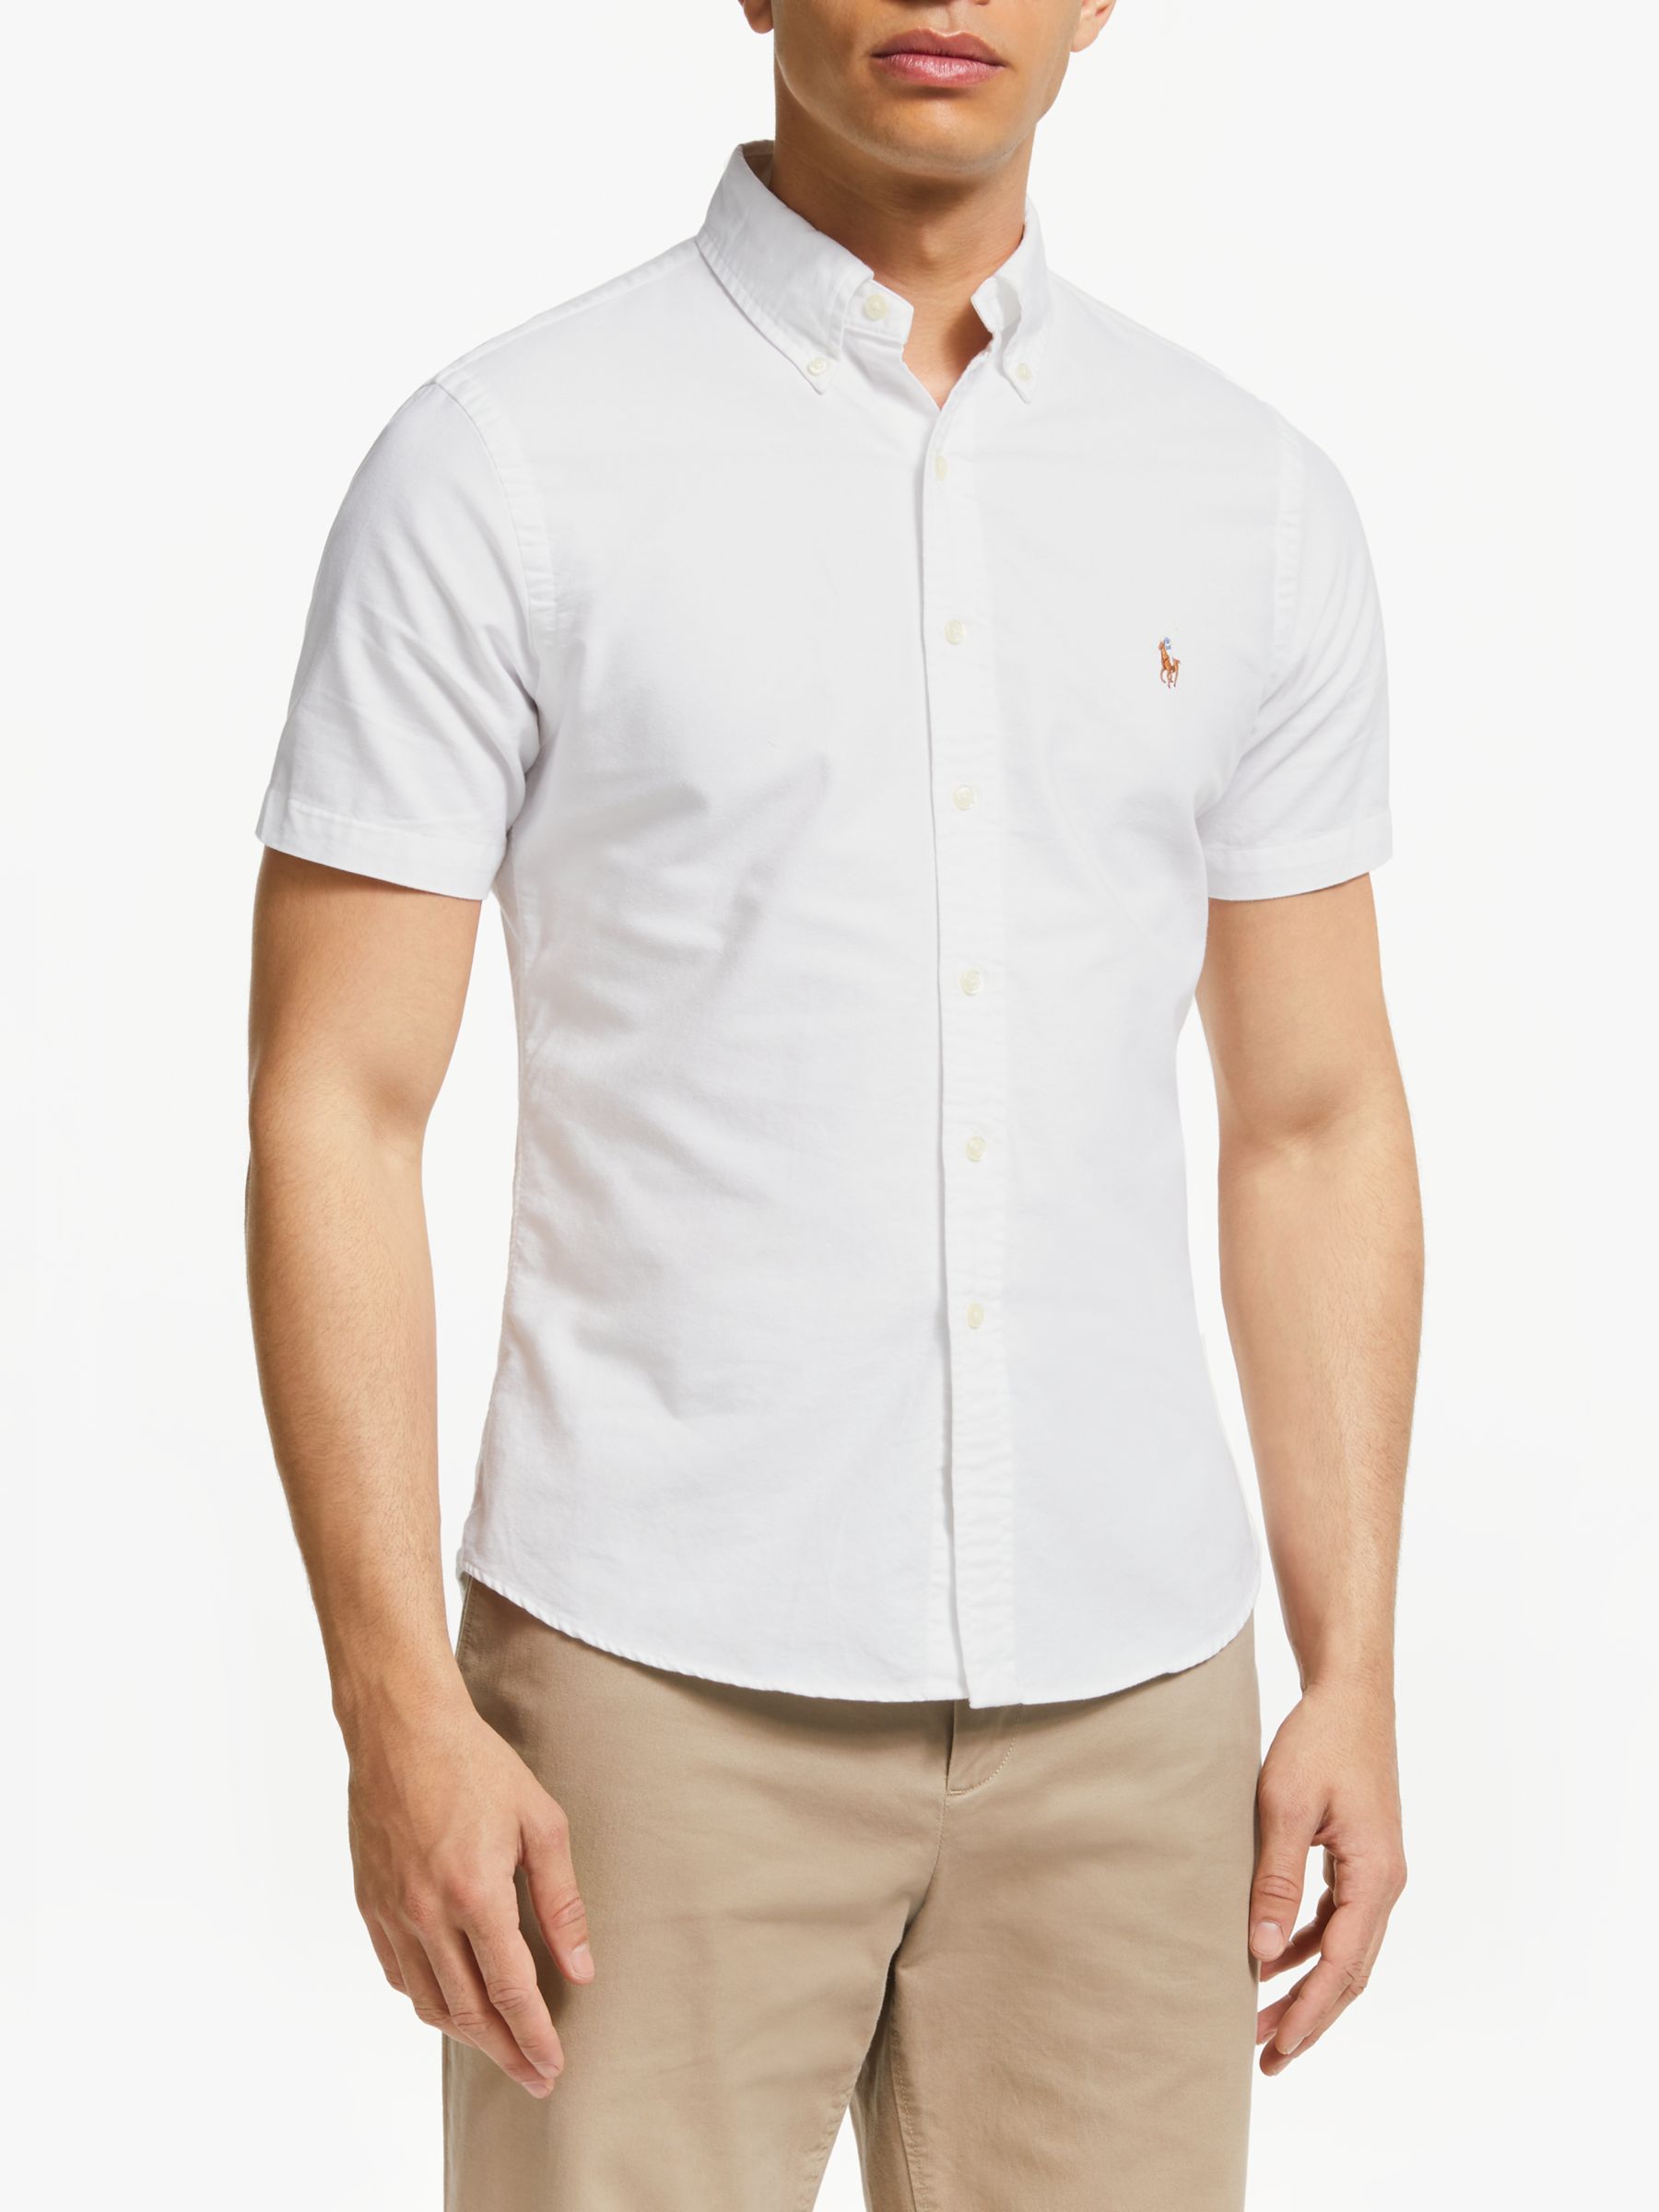 mens white ralph lauren shirt short sleeve